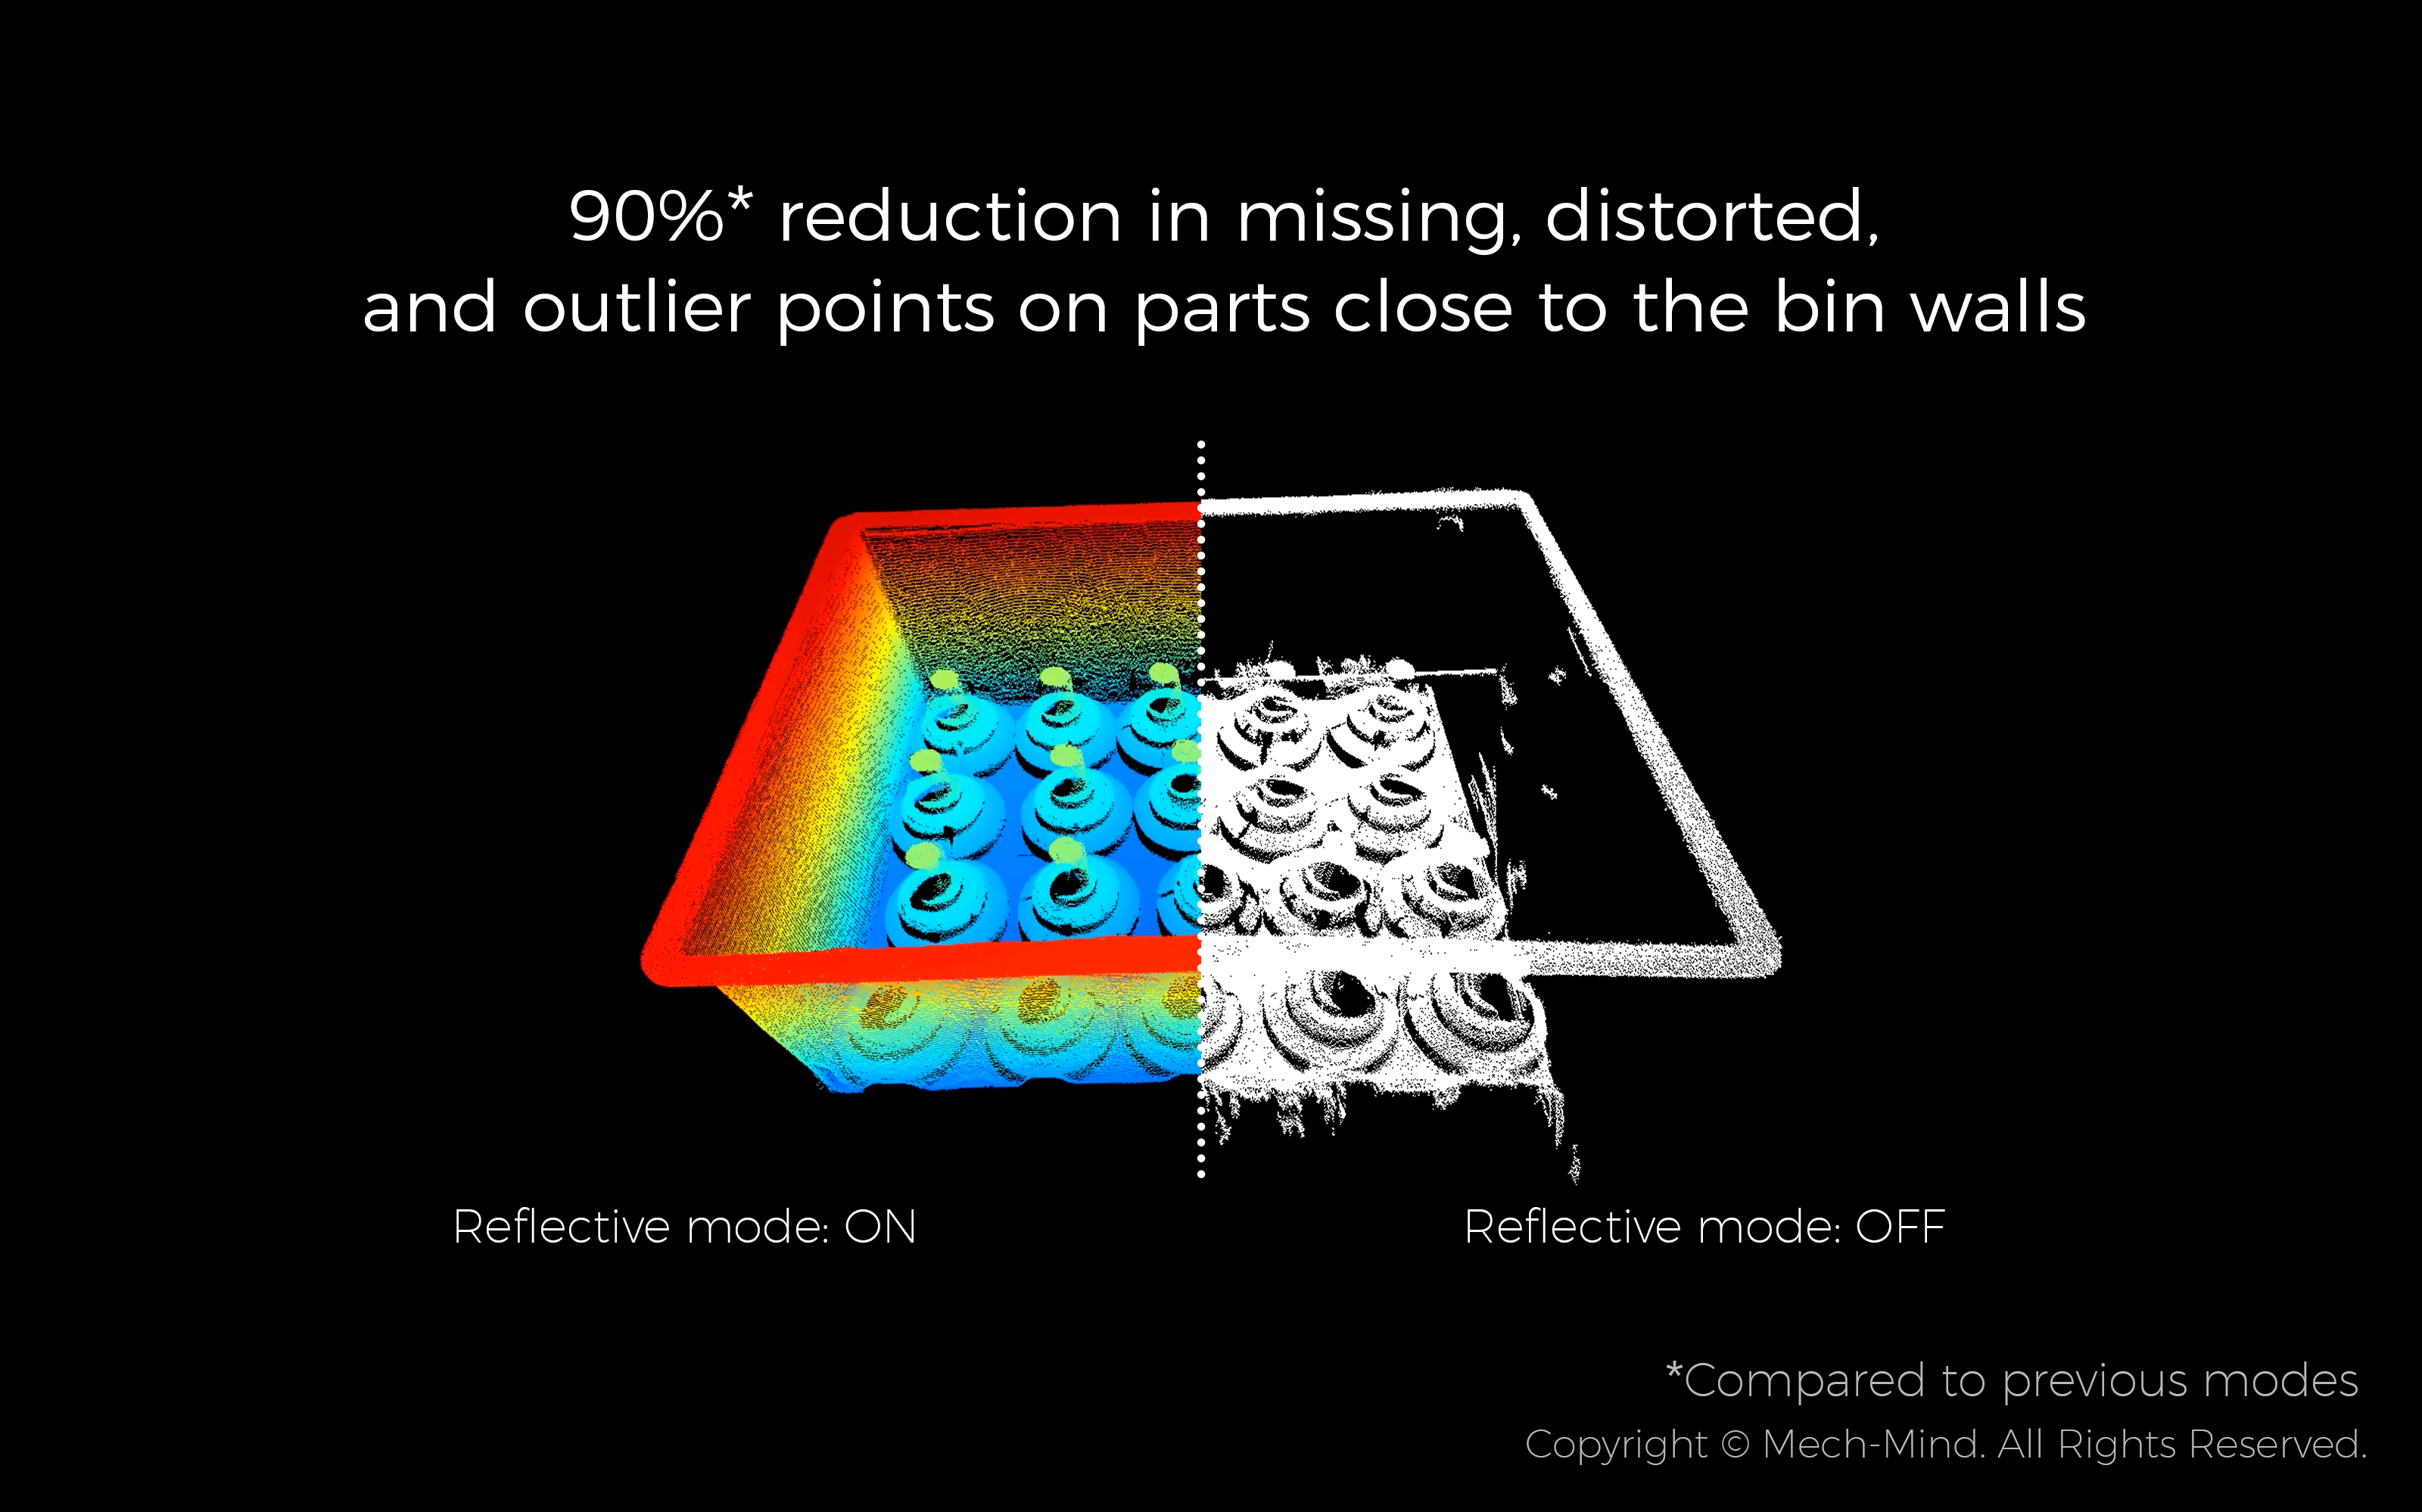 Mech-Mind New Structured Light Imaging Algorithm: Revolutionizing Reflective Imaging Capabilities